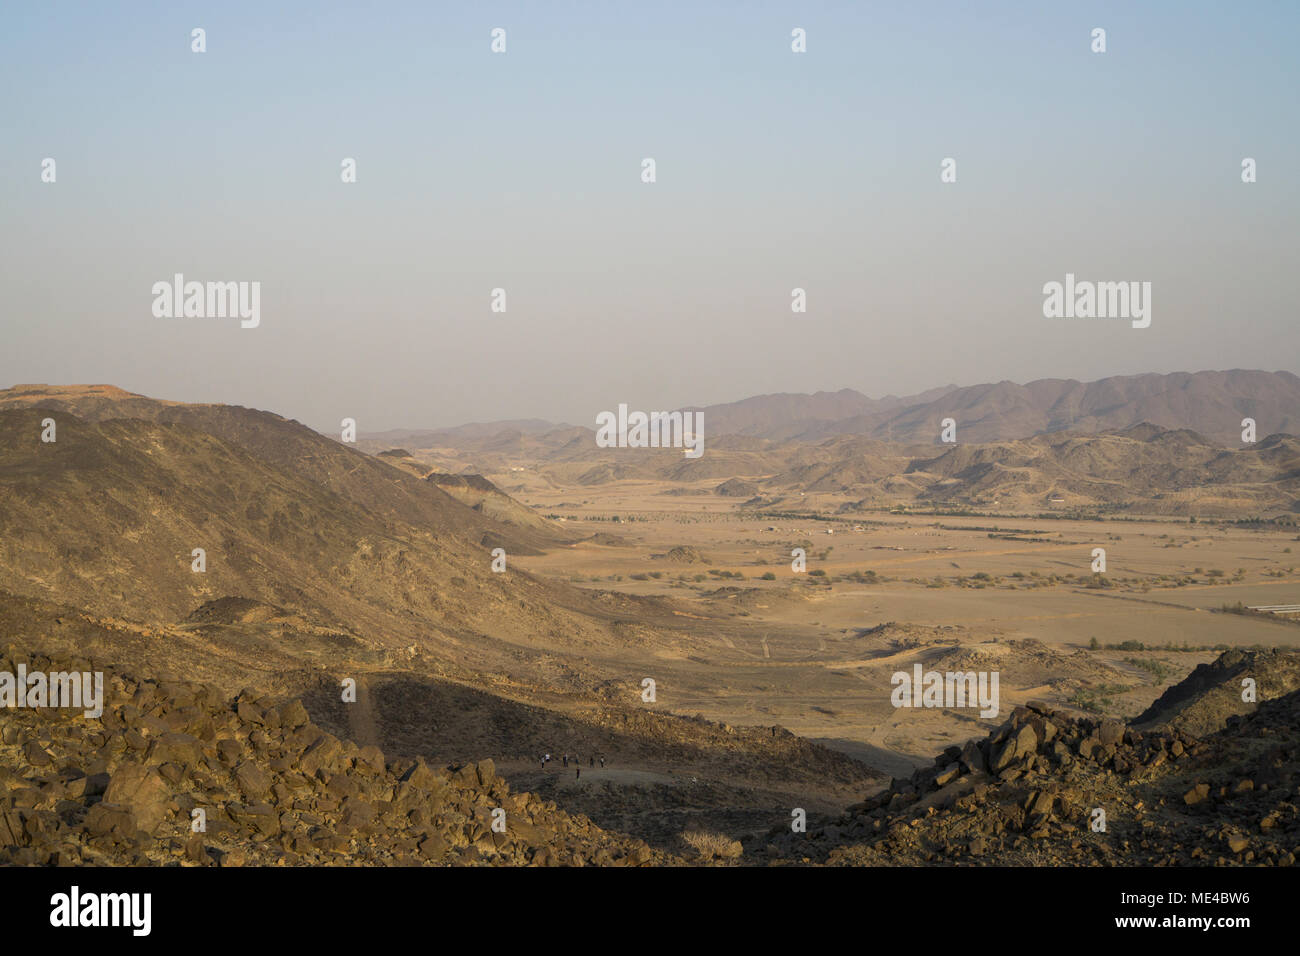 Escena del desierto en Arabia Saudita Asfan Foto de stock